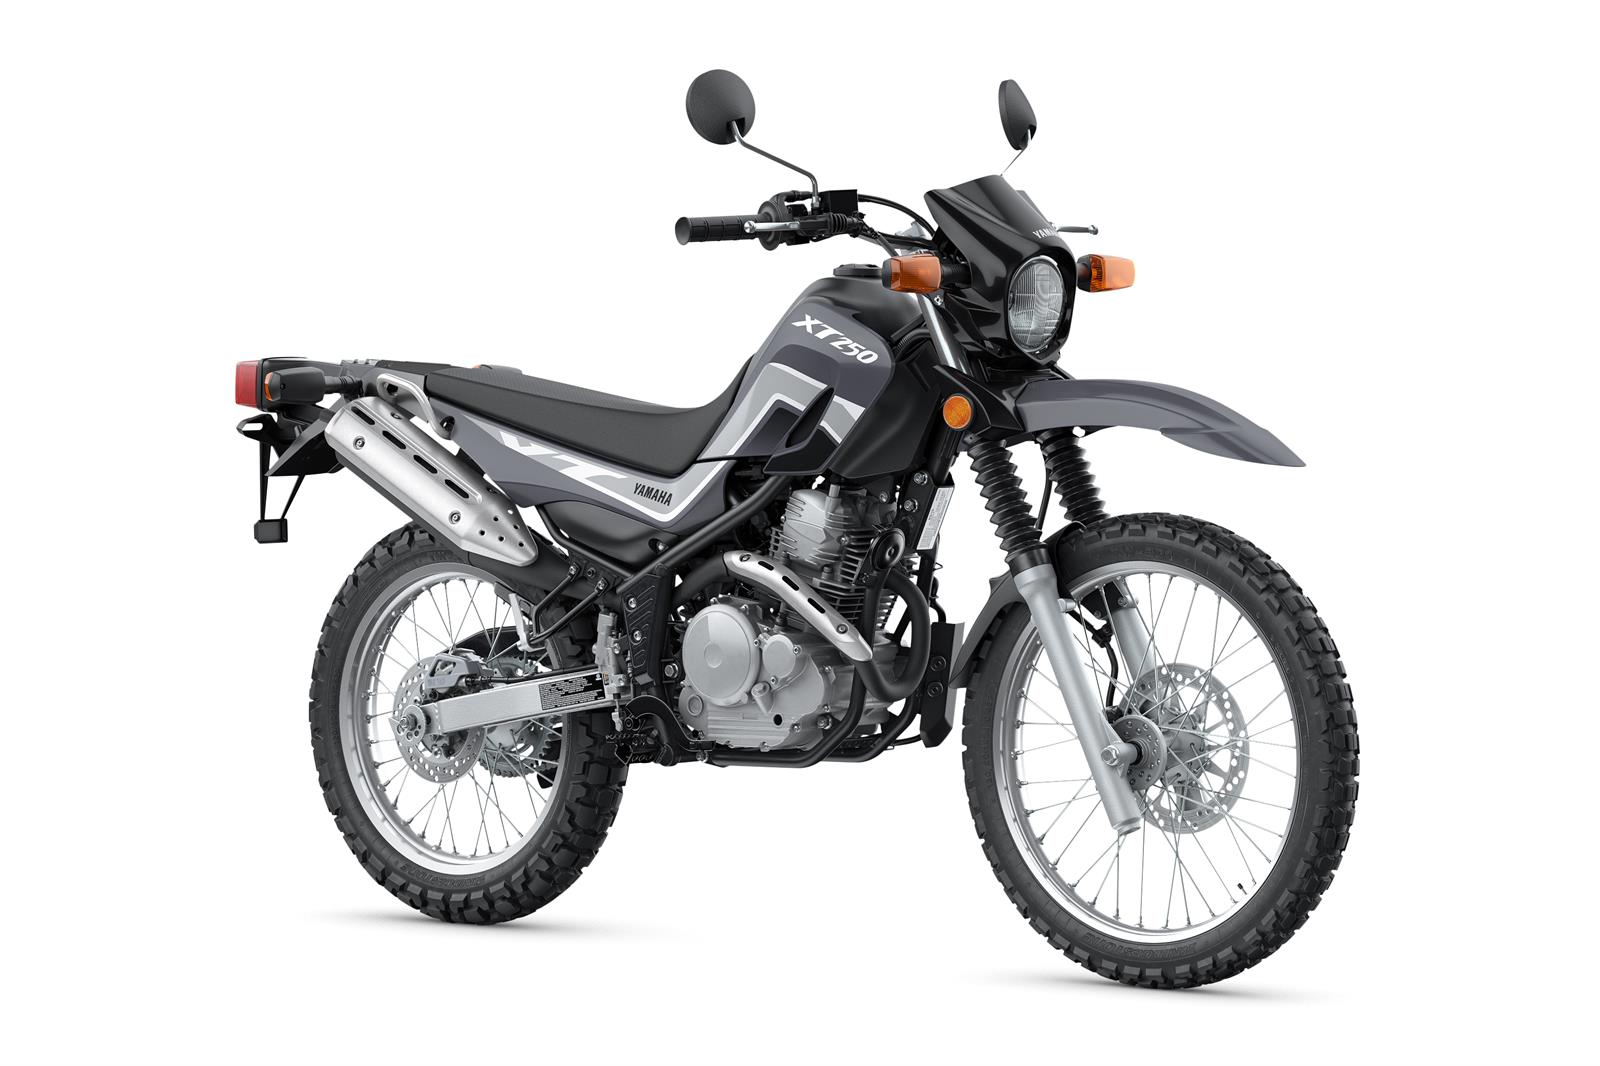 Yamaha Xt250 Motorcycle For Sale